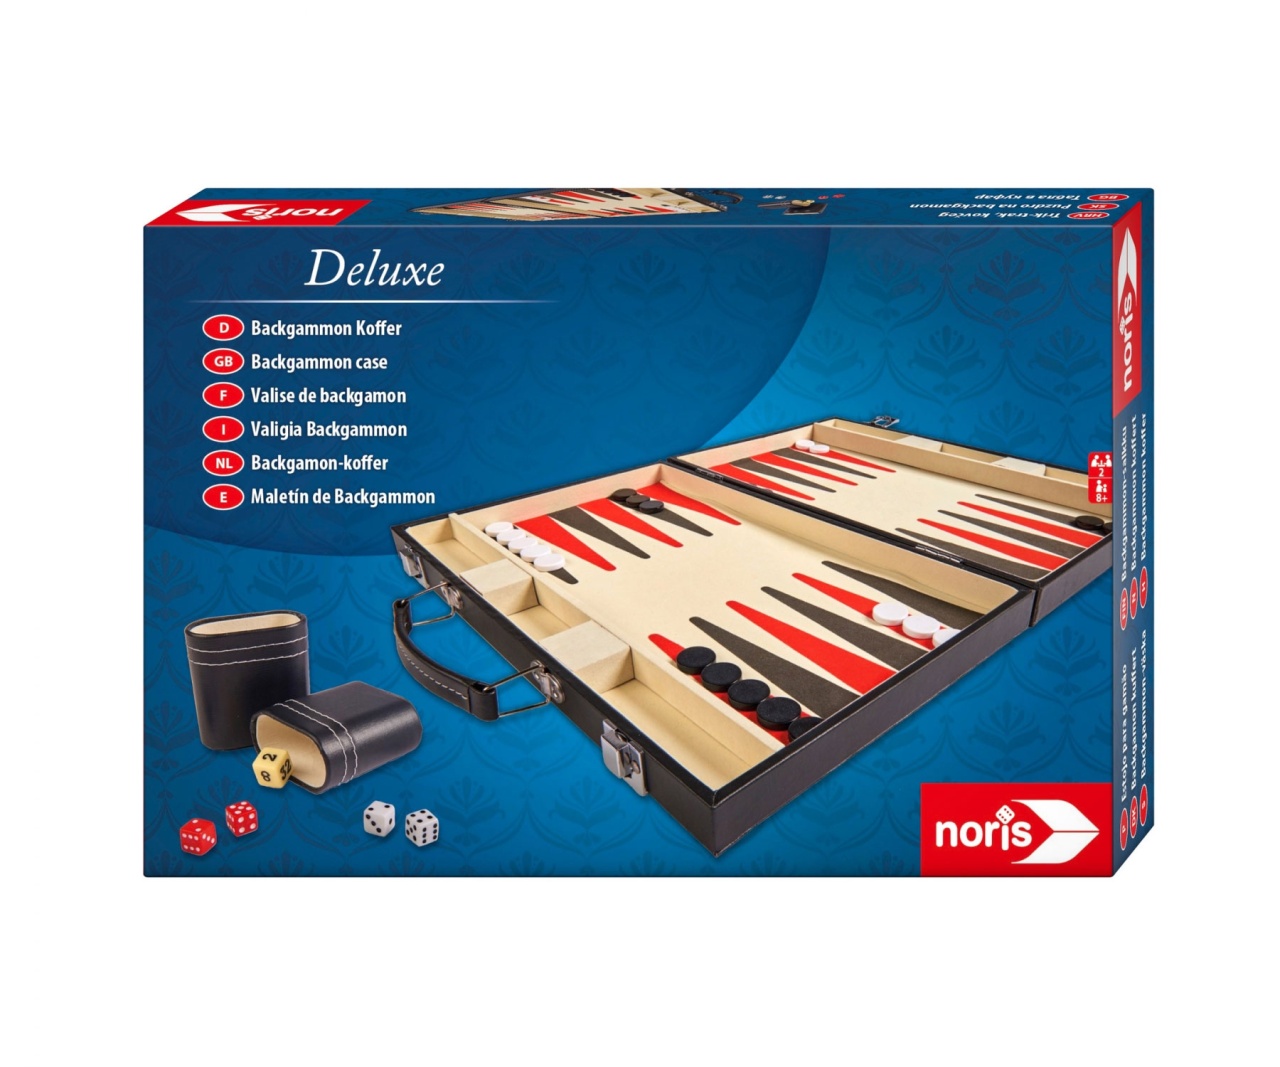 Deluxe Backgammon Koffer von Noris